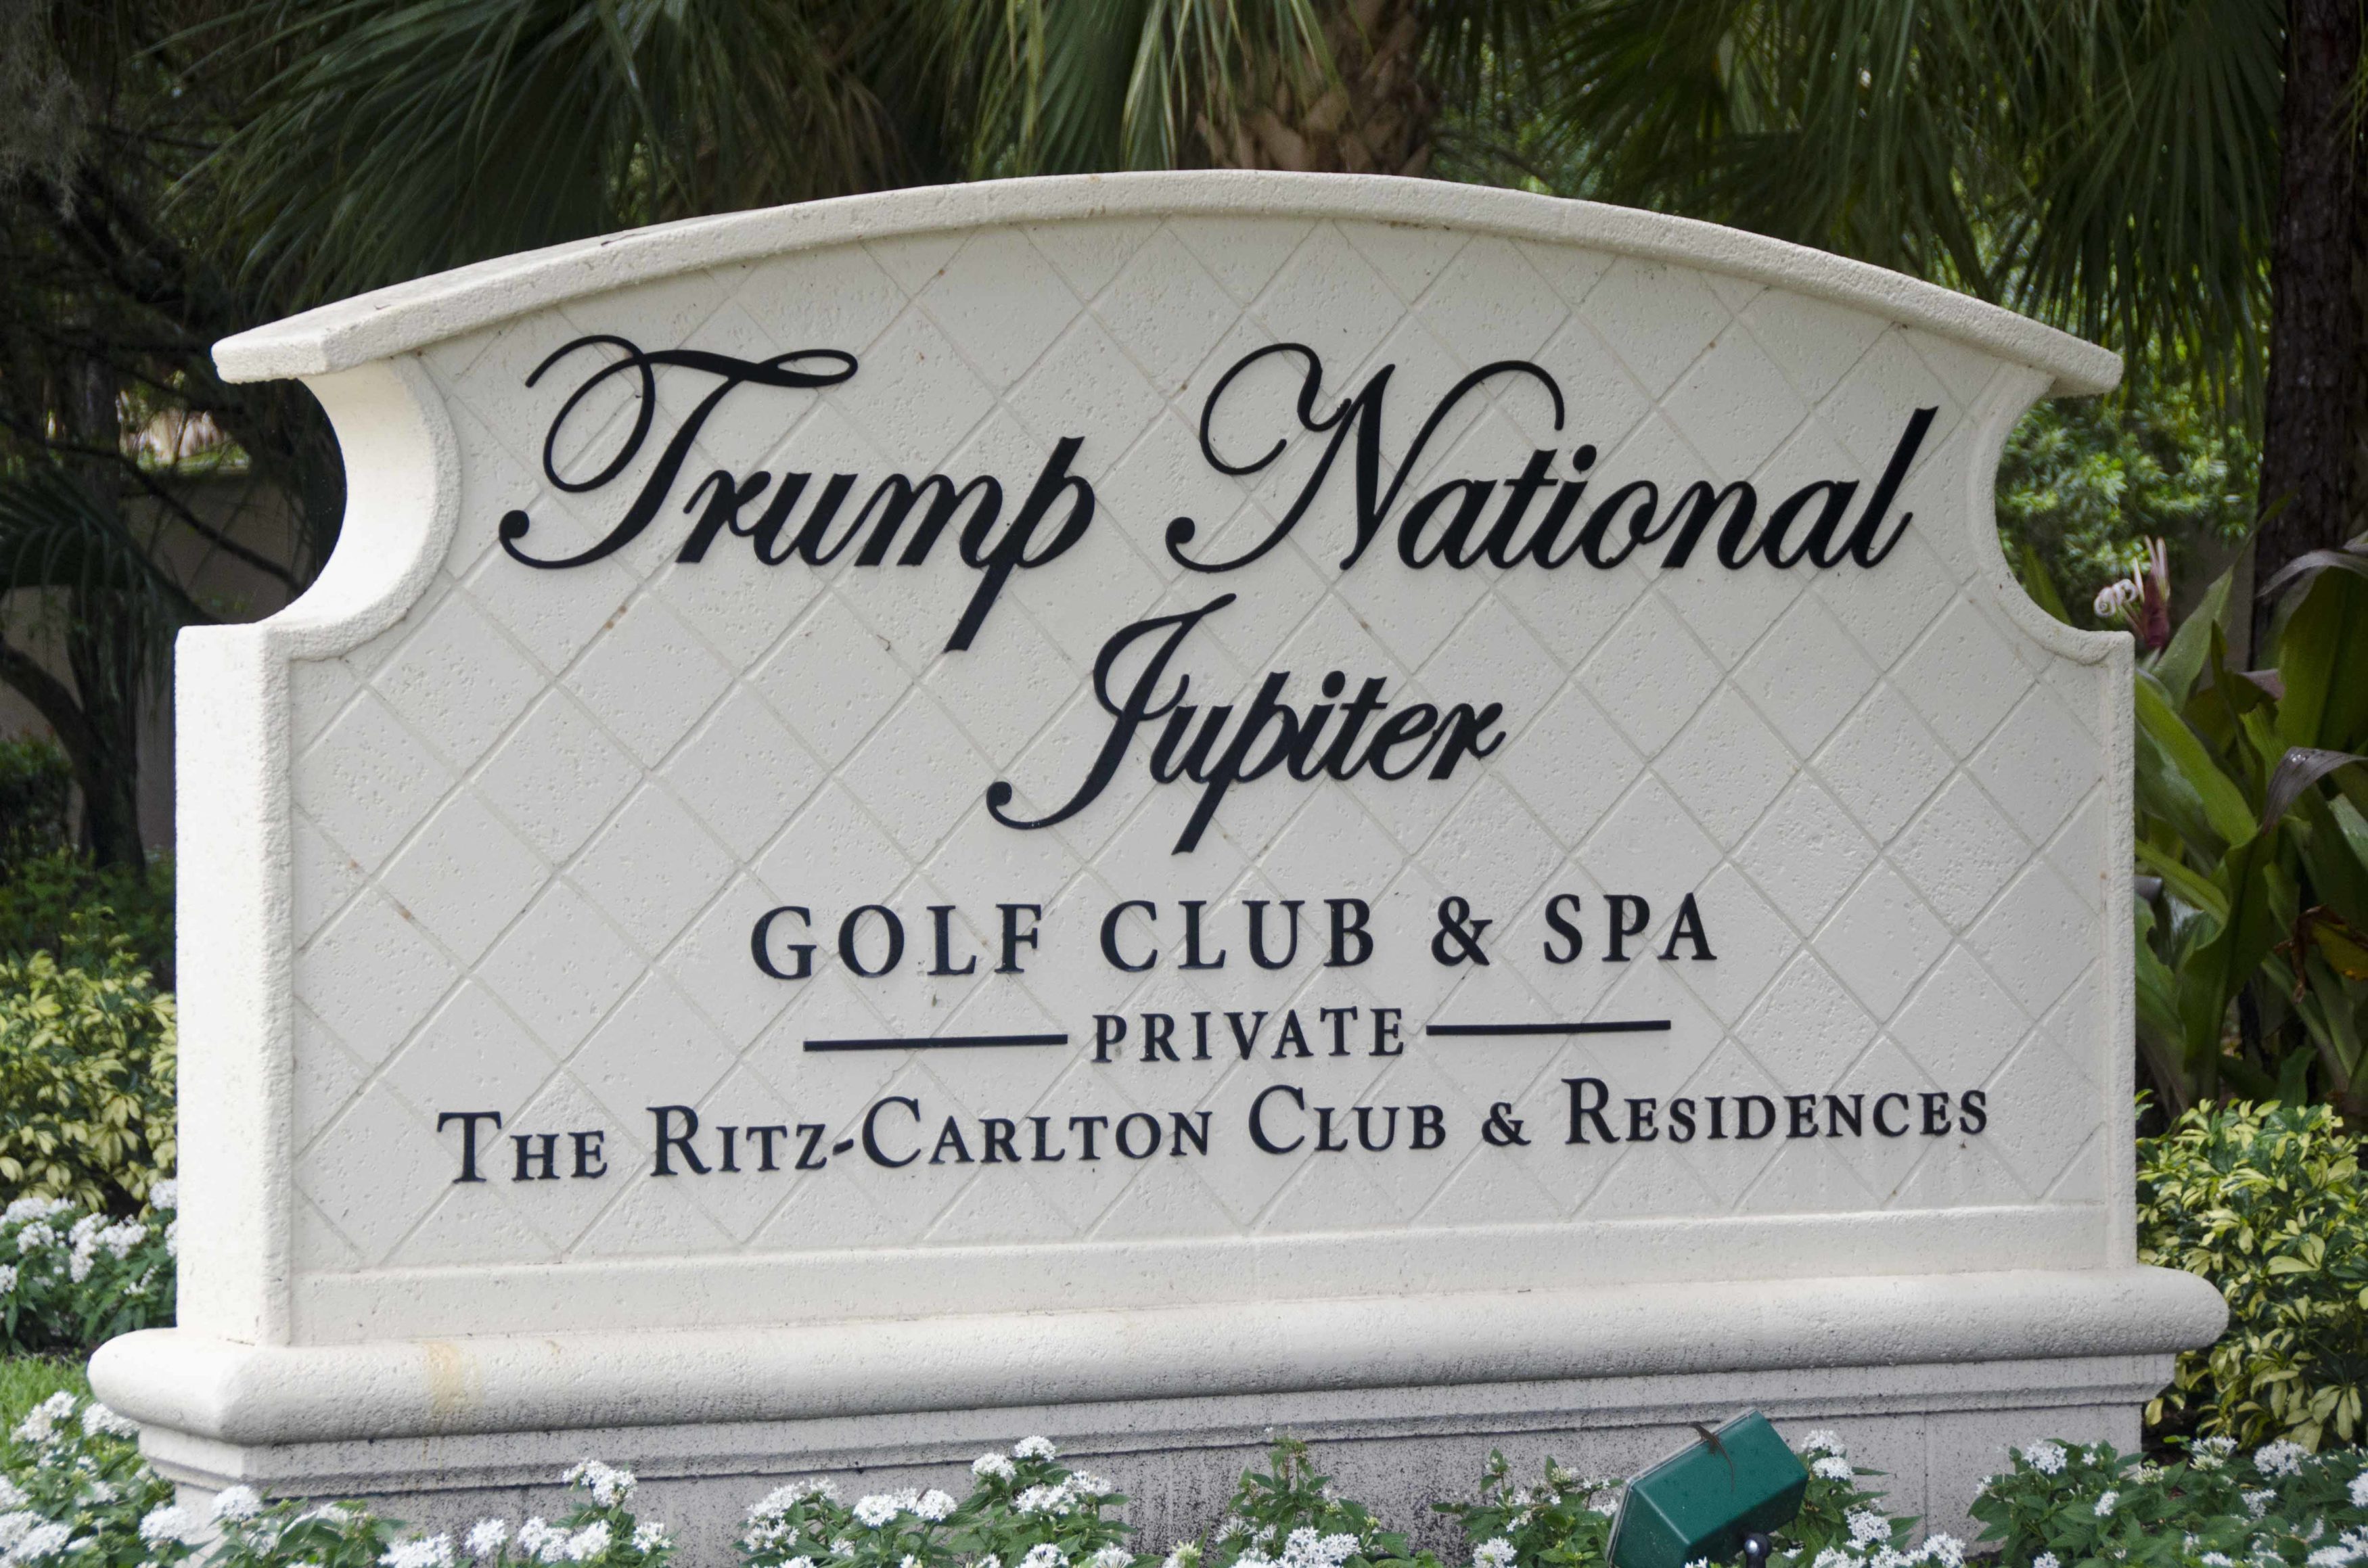 Trump national golf course Jupiter